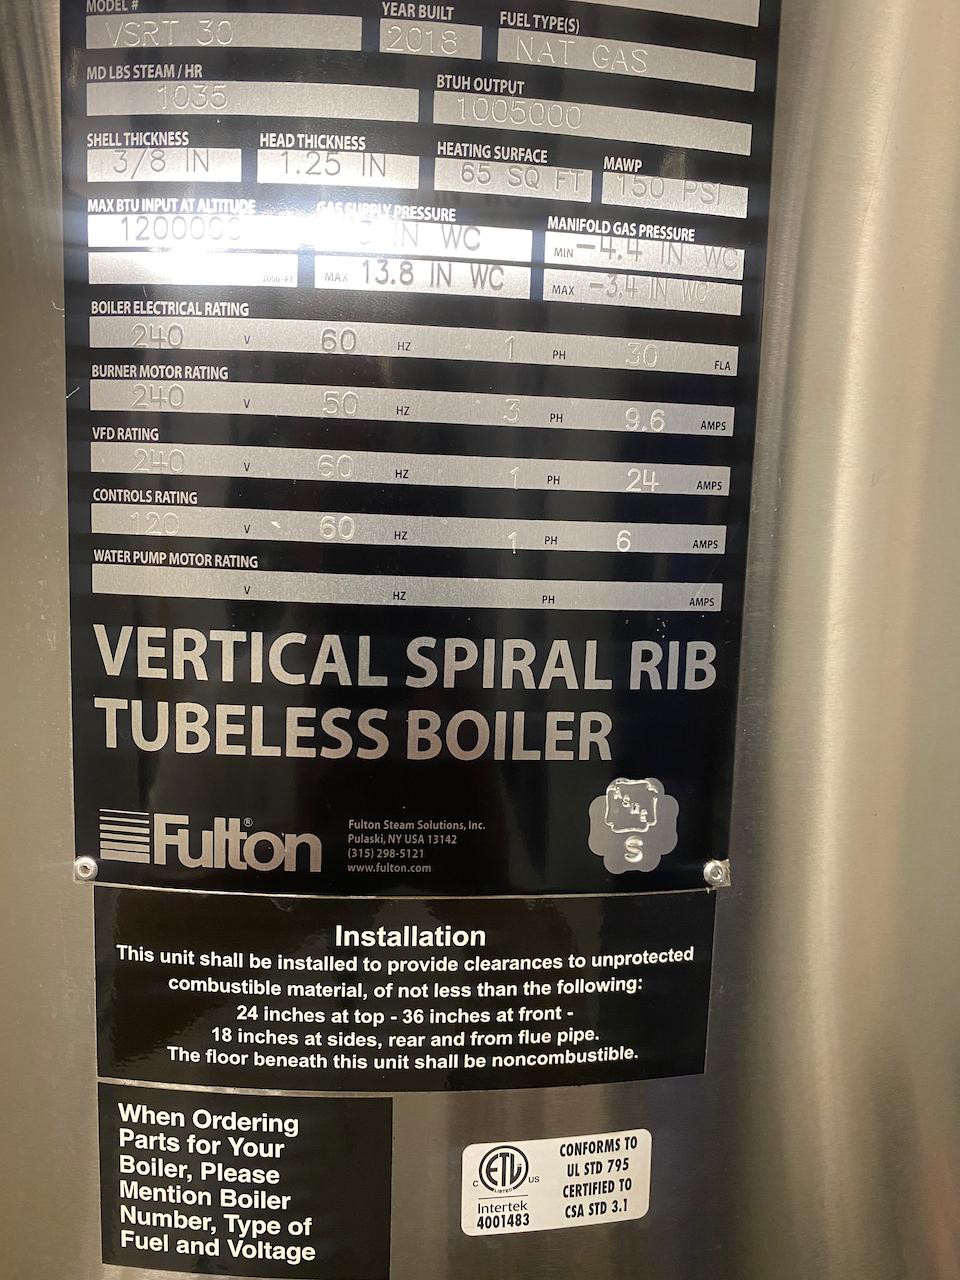 Boiler (2018 Fulton Vertical Spiral Rib Tubeless Natural Gas). Model #VSRT 30 Serial #VP-A-92